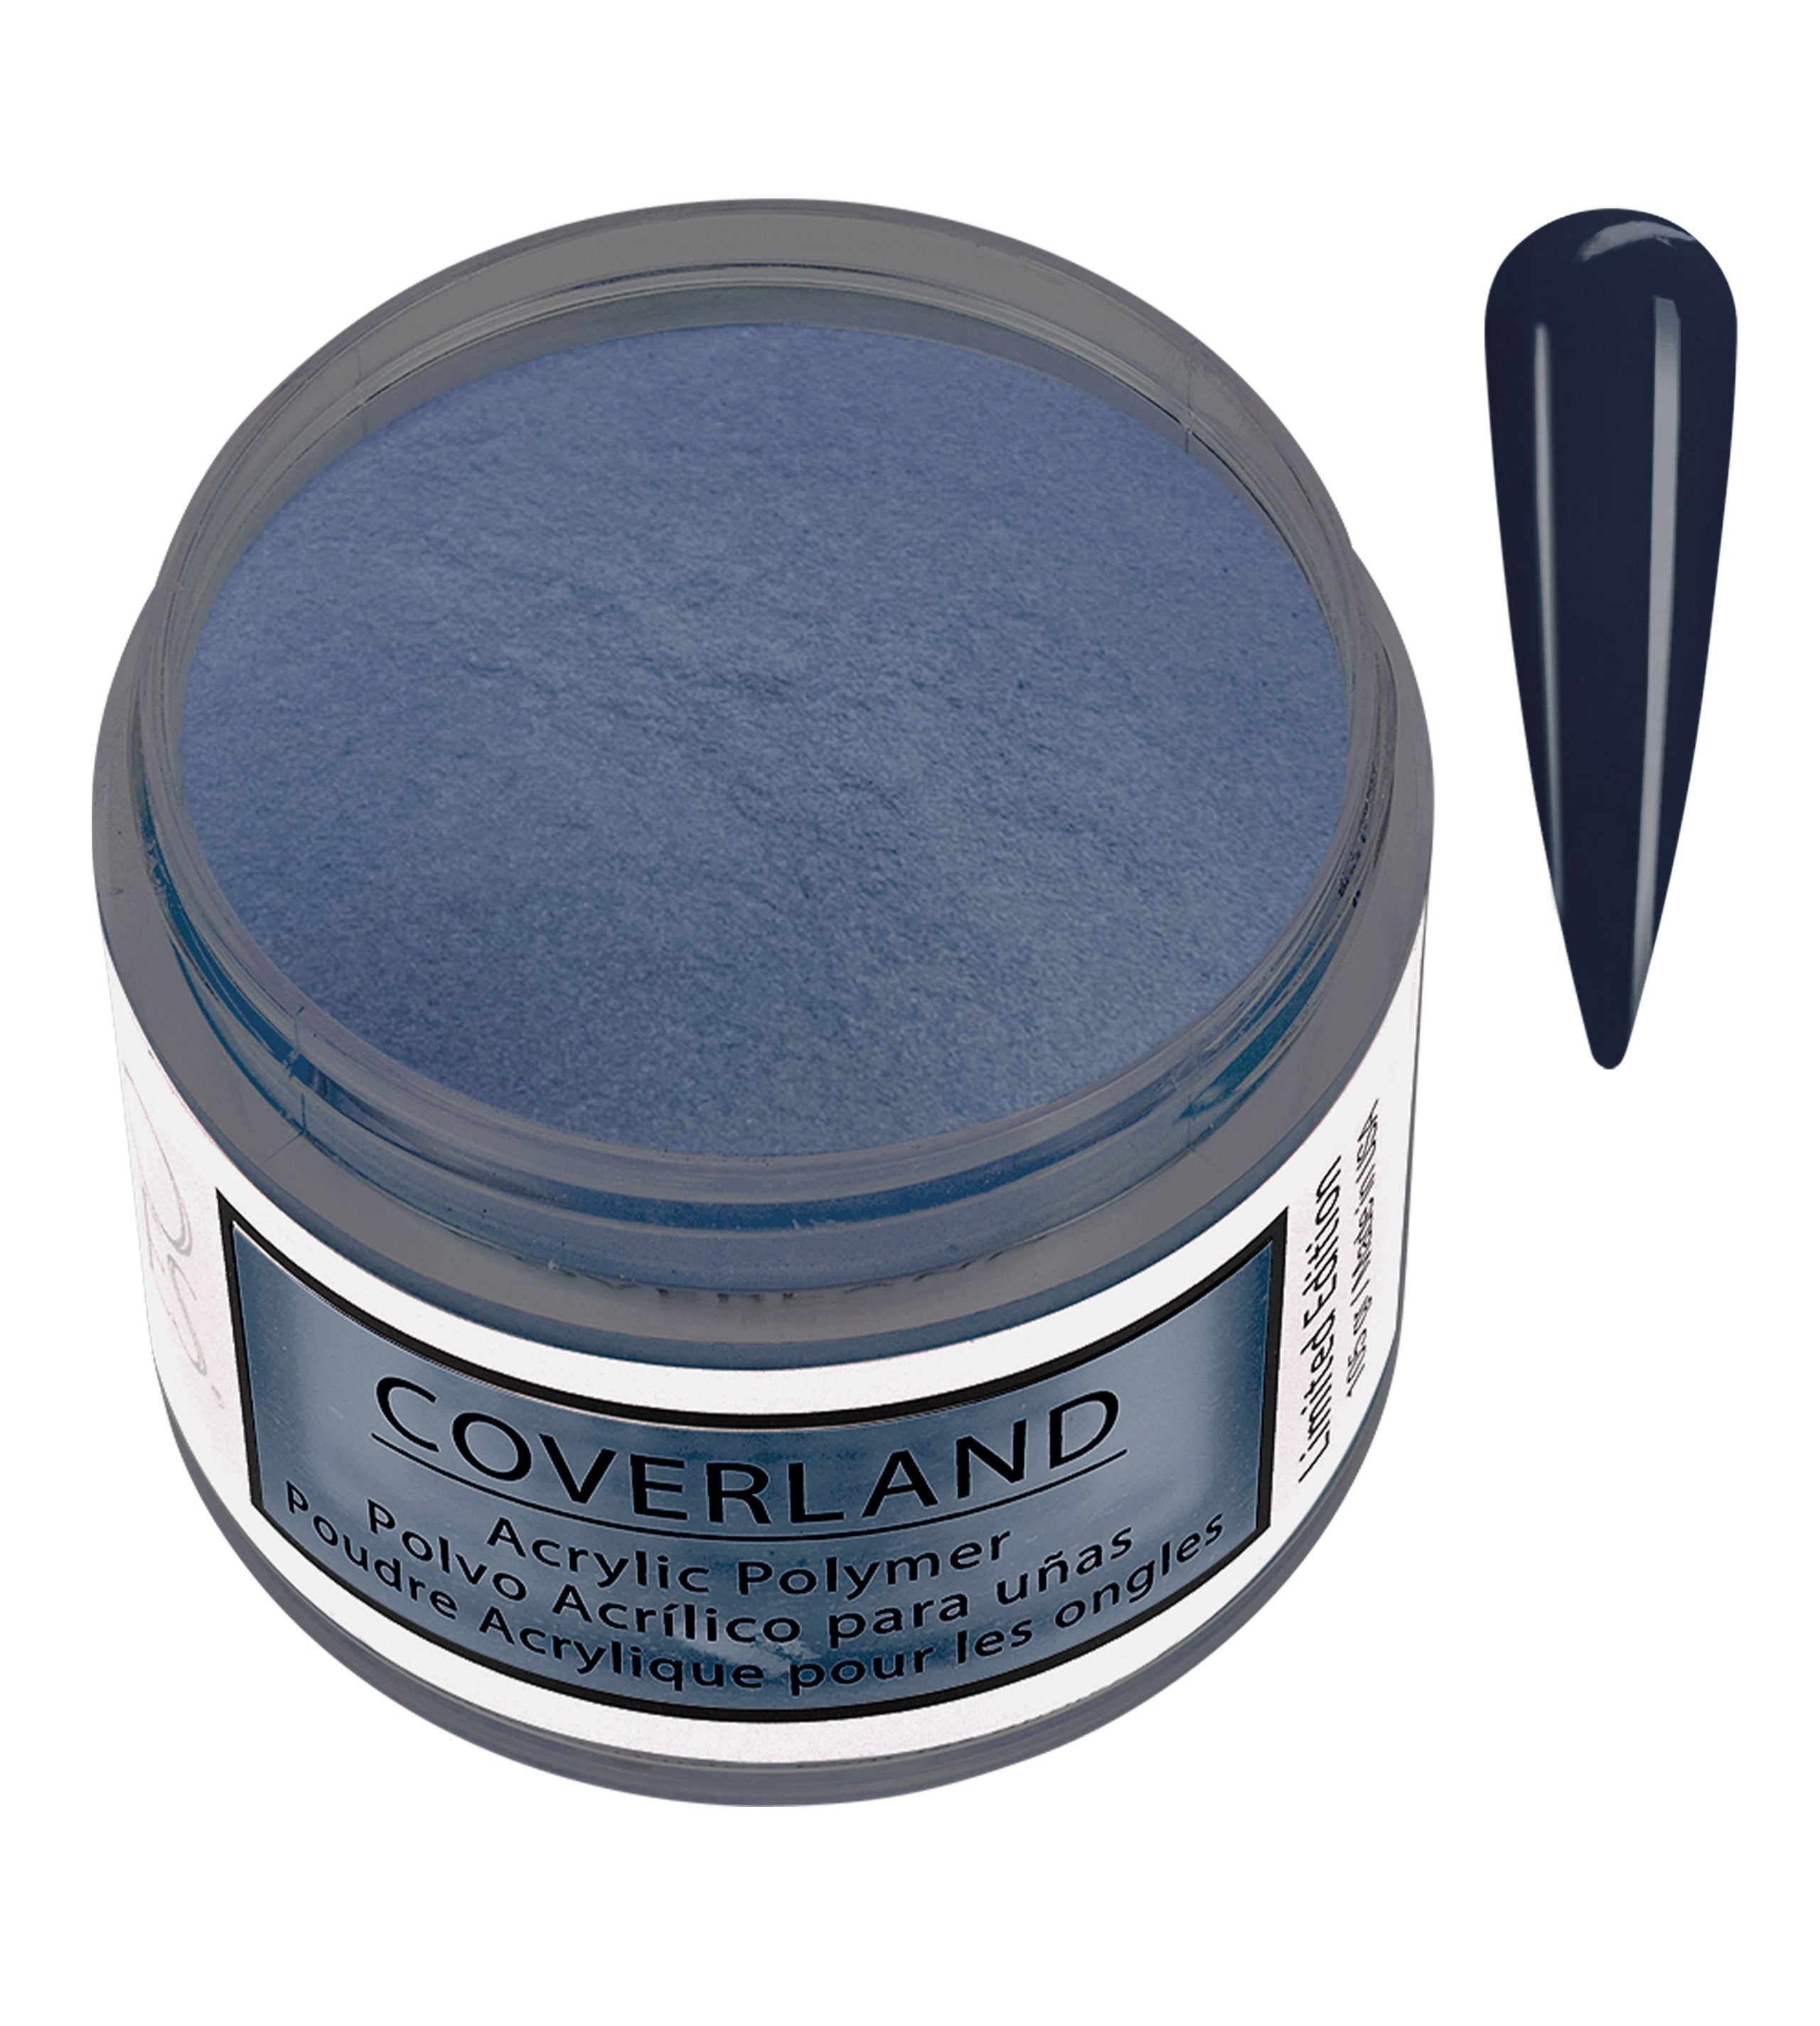 Coverland Acrylic Powder 1.5 oz 